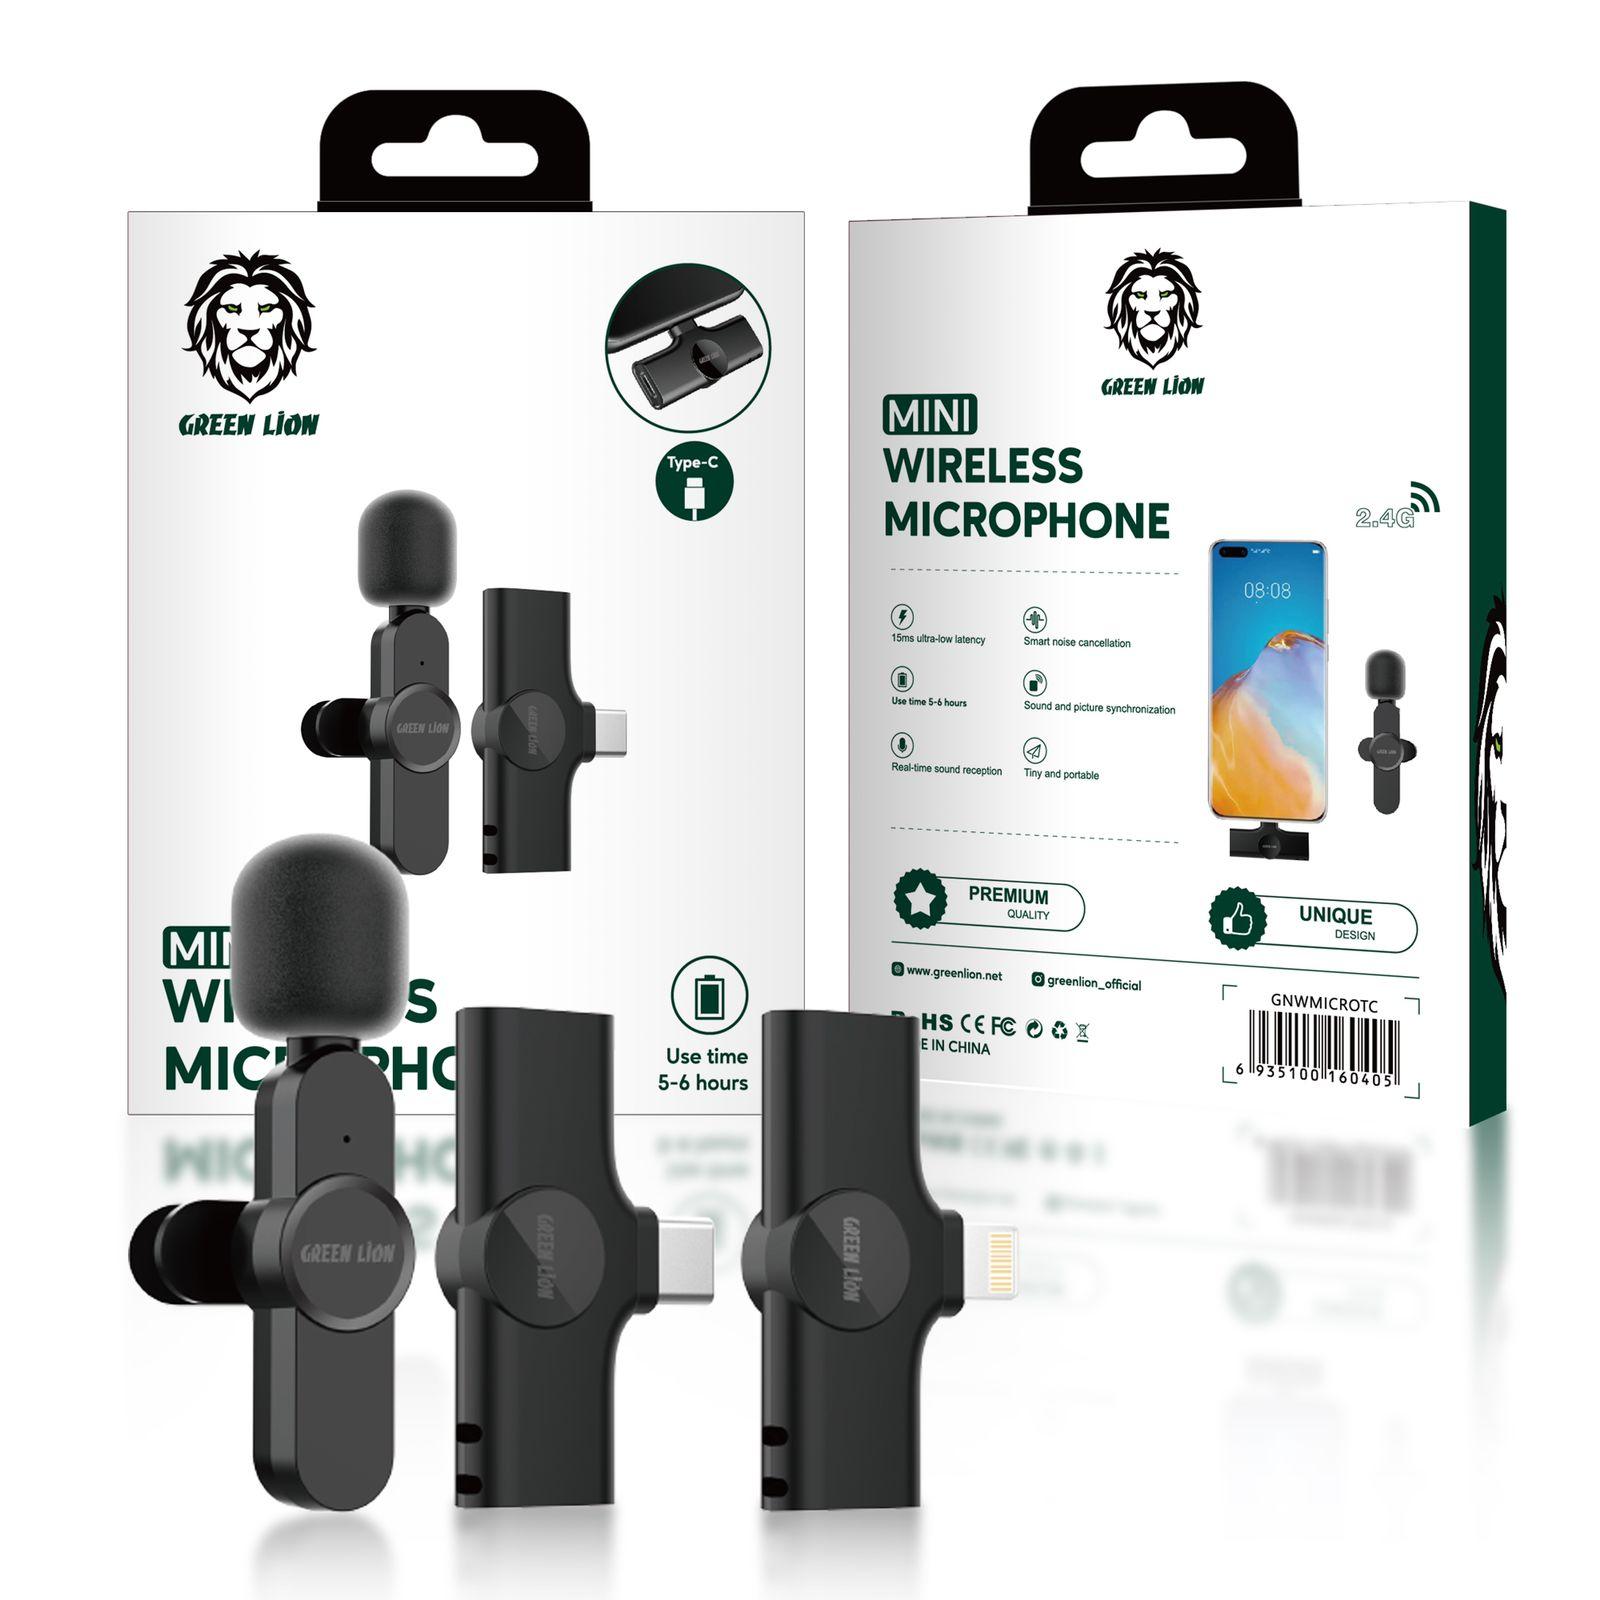 ميكروفون لاسلكي صغير لهواتف الآيفون Green Mini Wireless Microphone ( Lightning Connector ) - Black